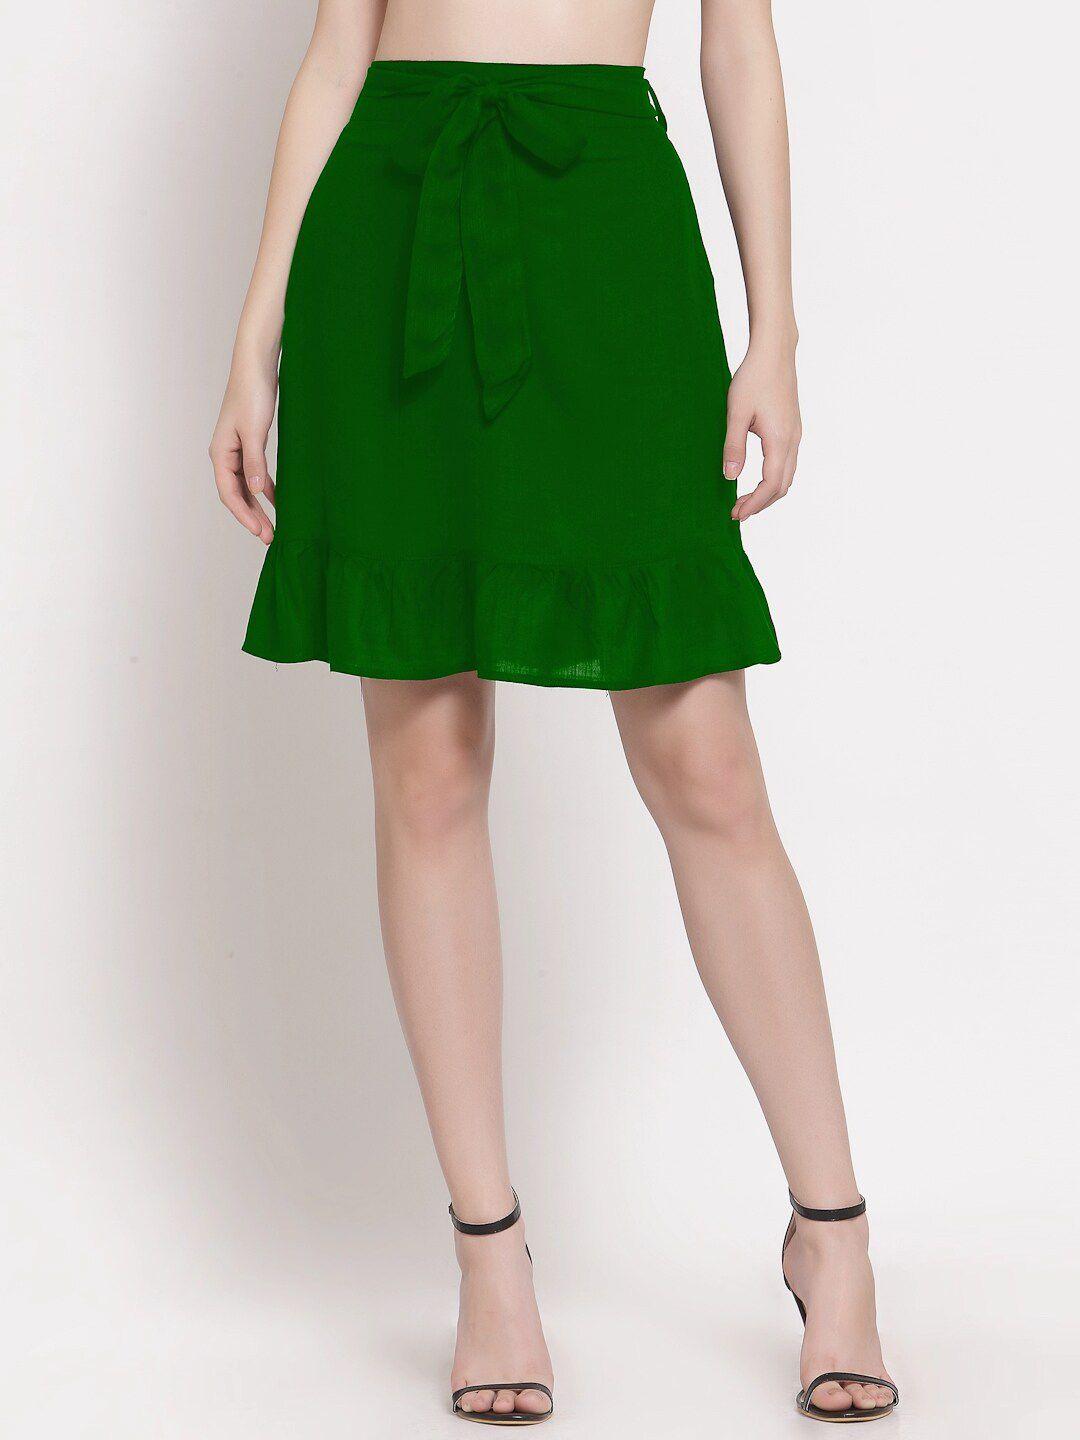 patrorna women green solid frilled straight skirt